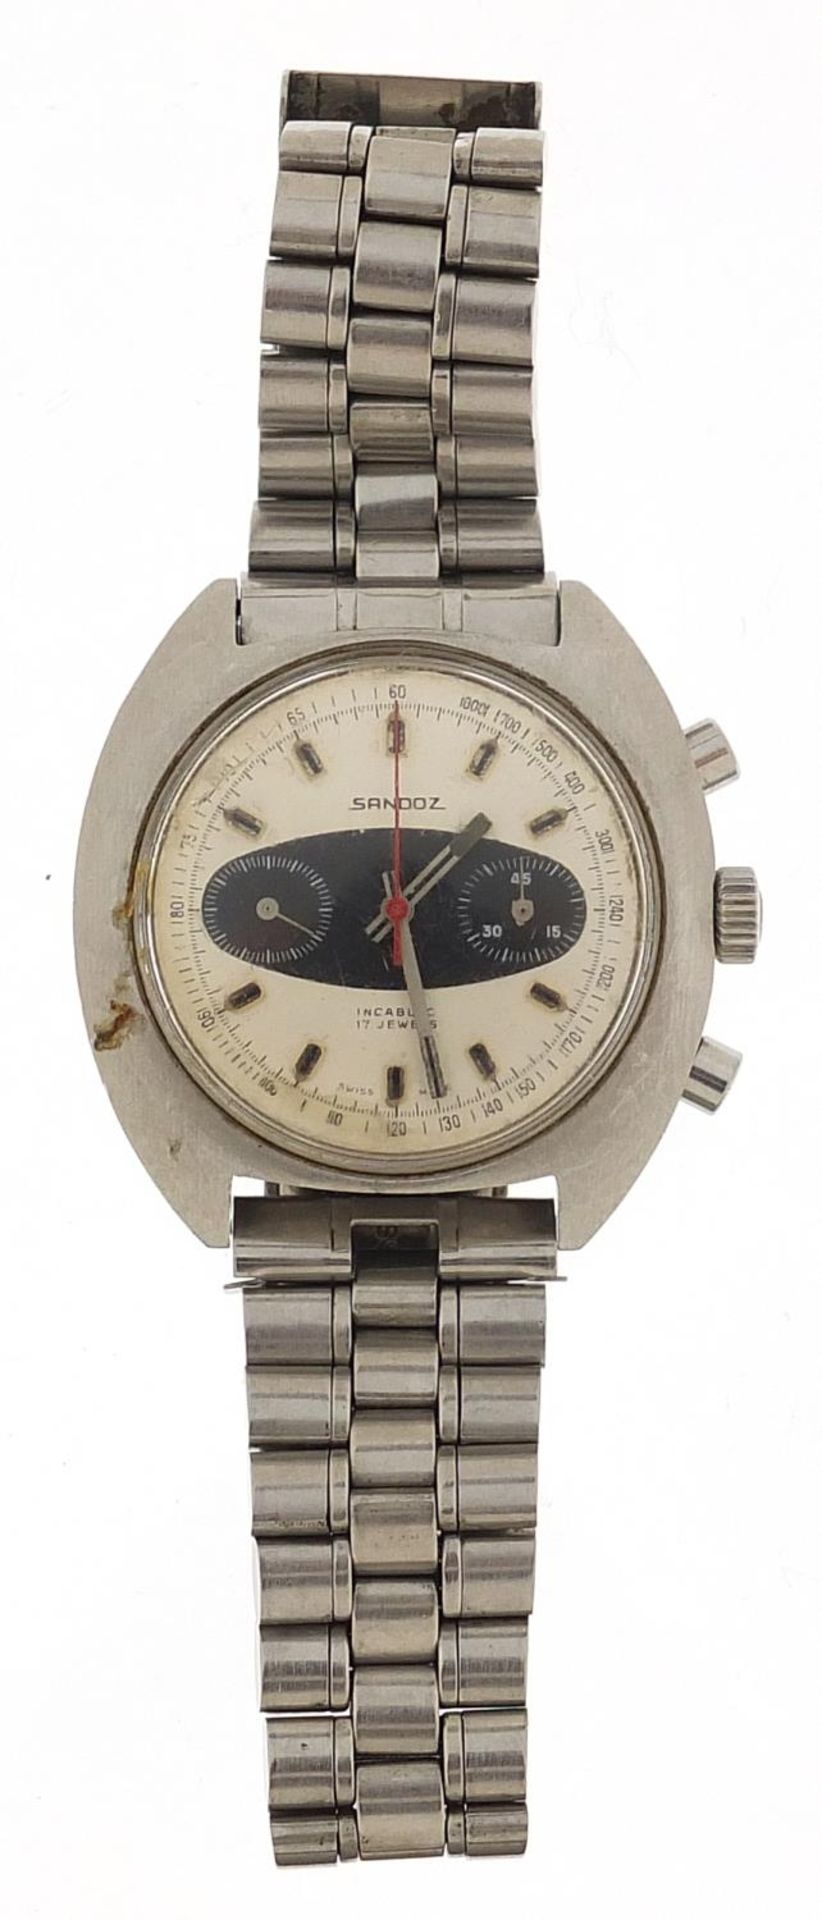 Sandoz, vintage gentlemen's chronograph wristwatch, the case 40mm wide - Image 2 of 5